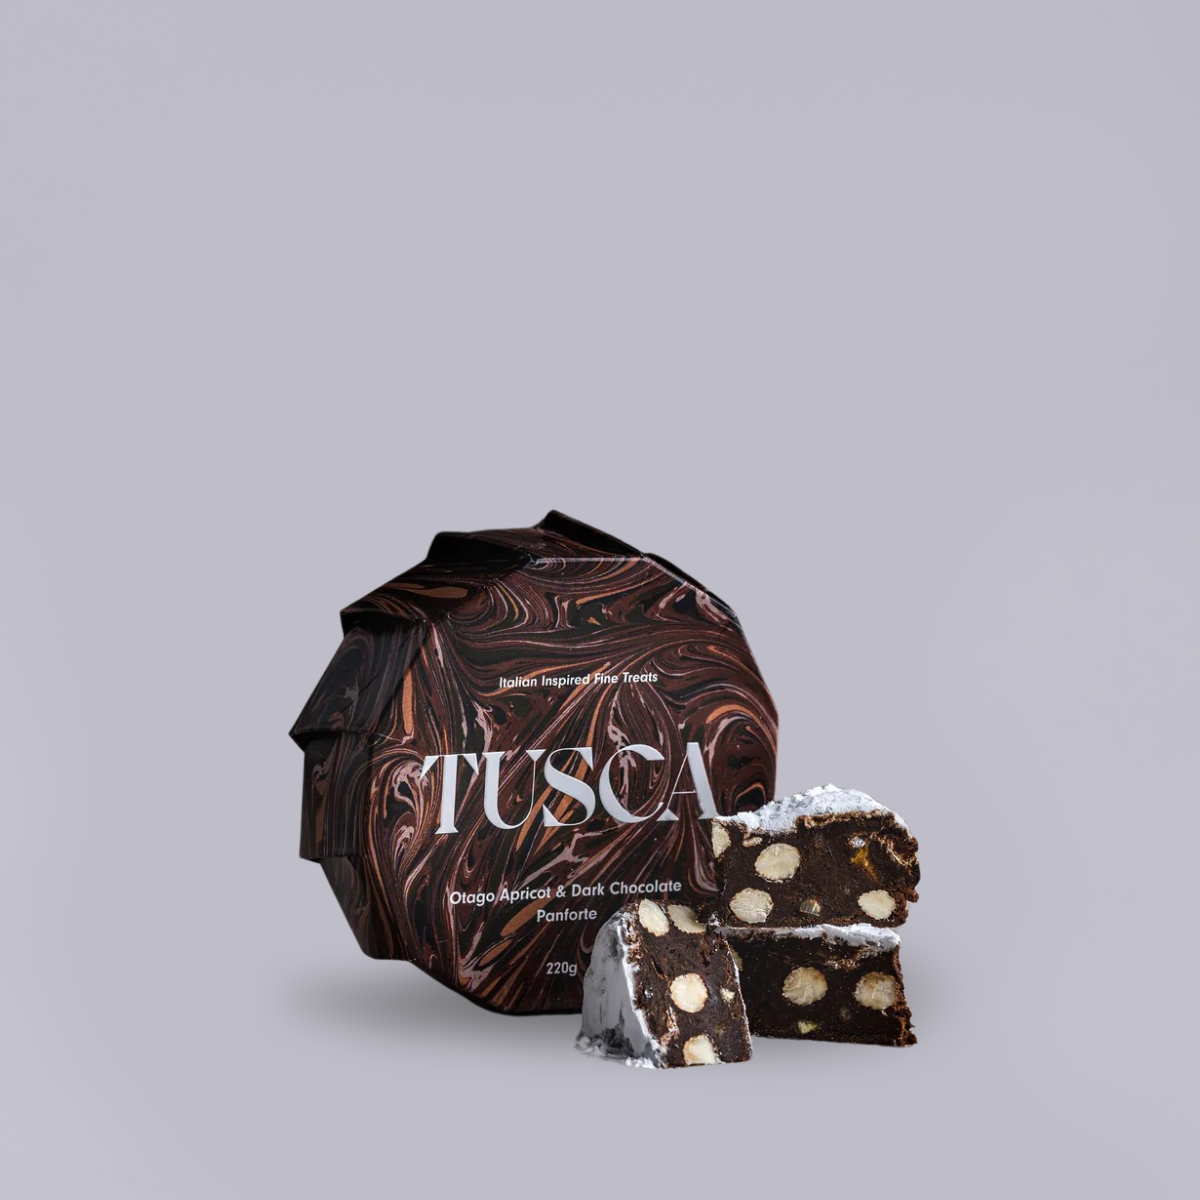 Tusca | Panforte | Otago Apricot & Dark Chocolate | 220g